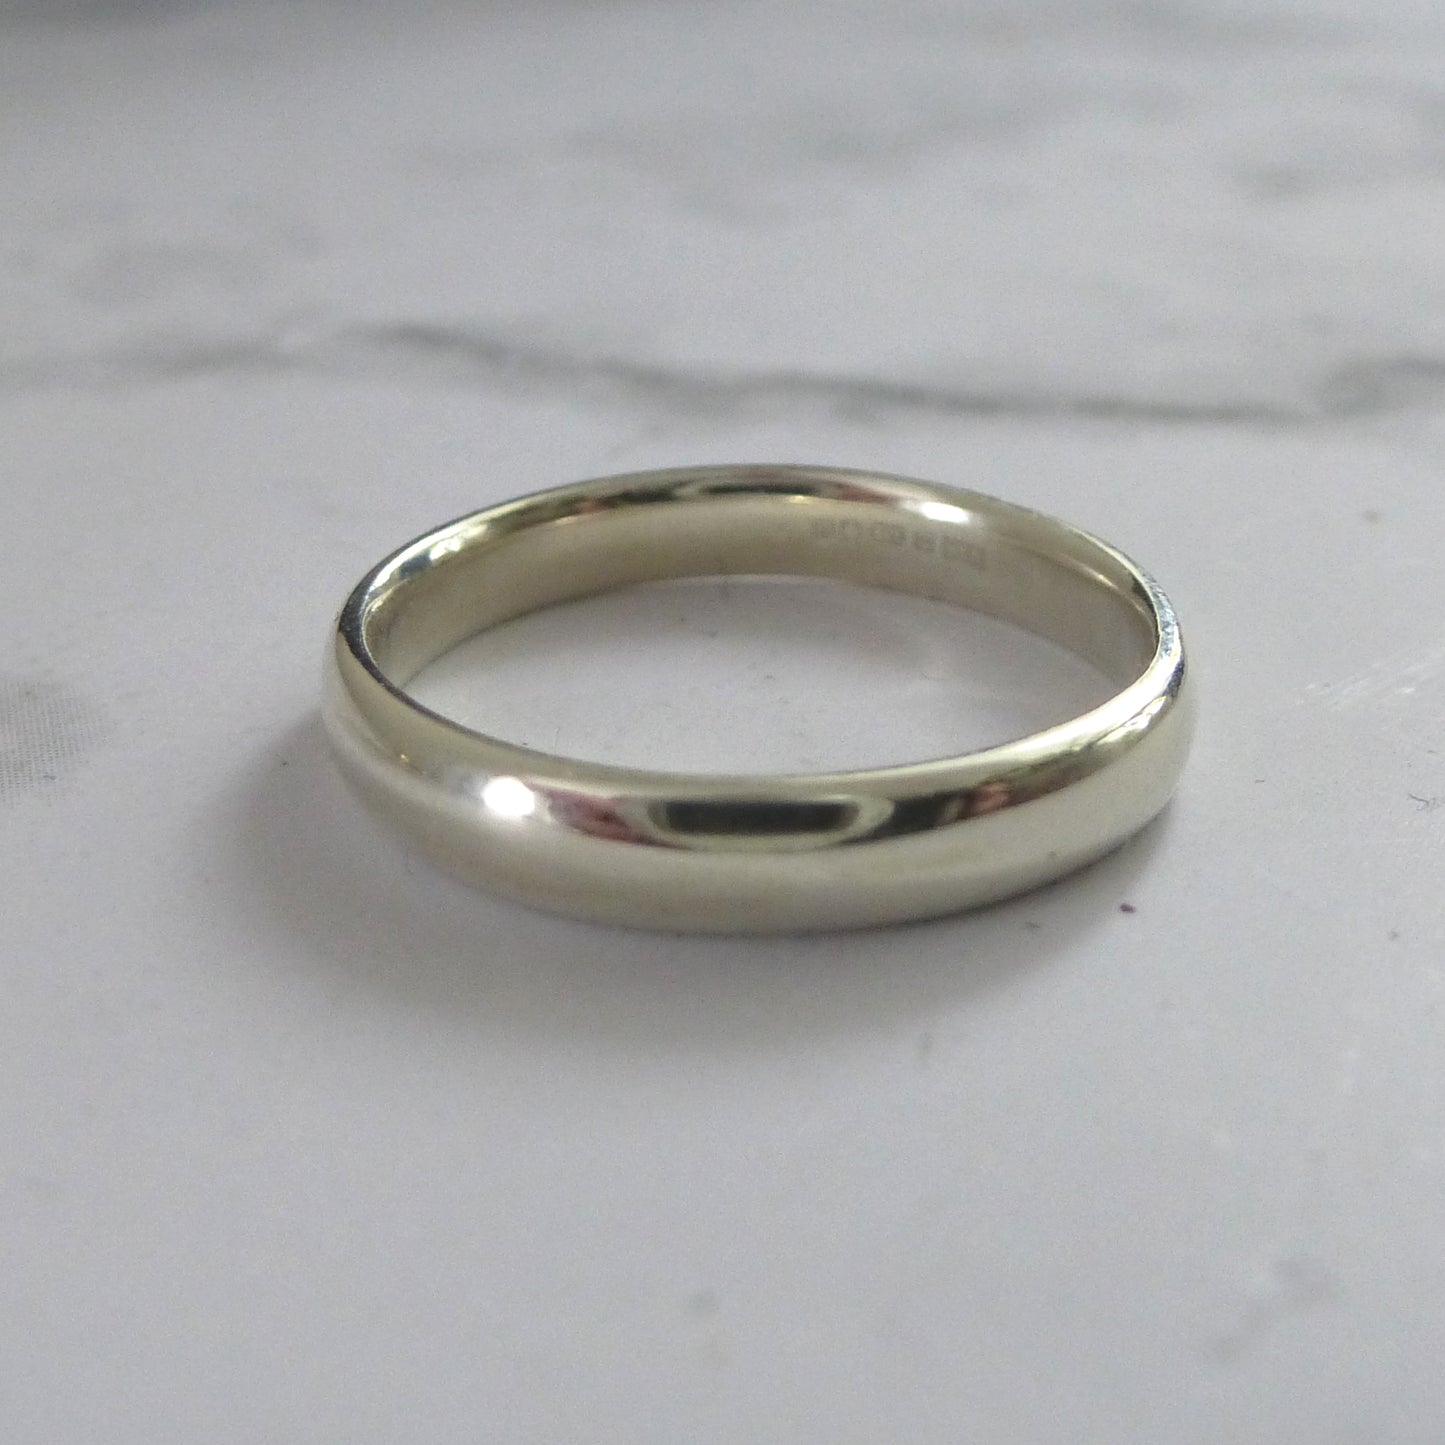 3mm 9ct white gold handmade wedding ring, soft modern court shape, smooth finish